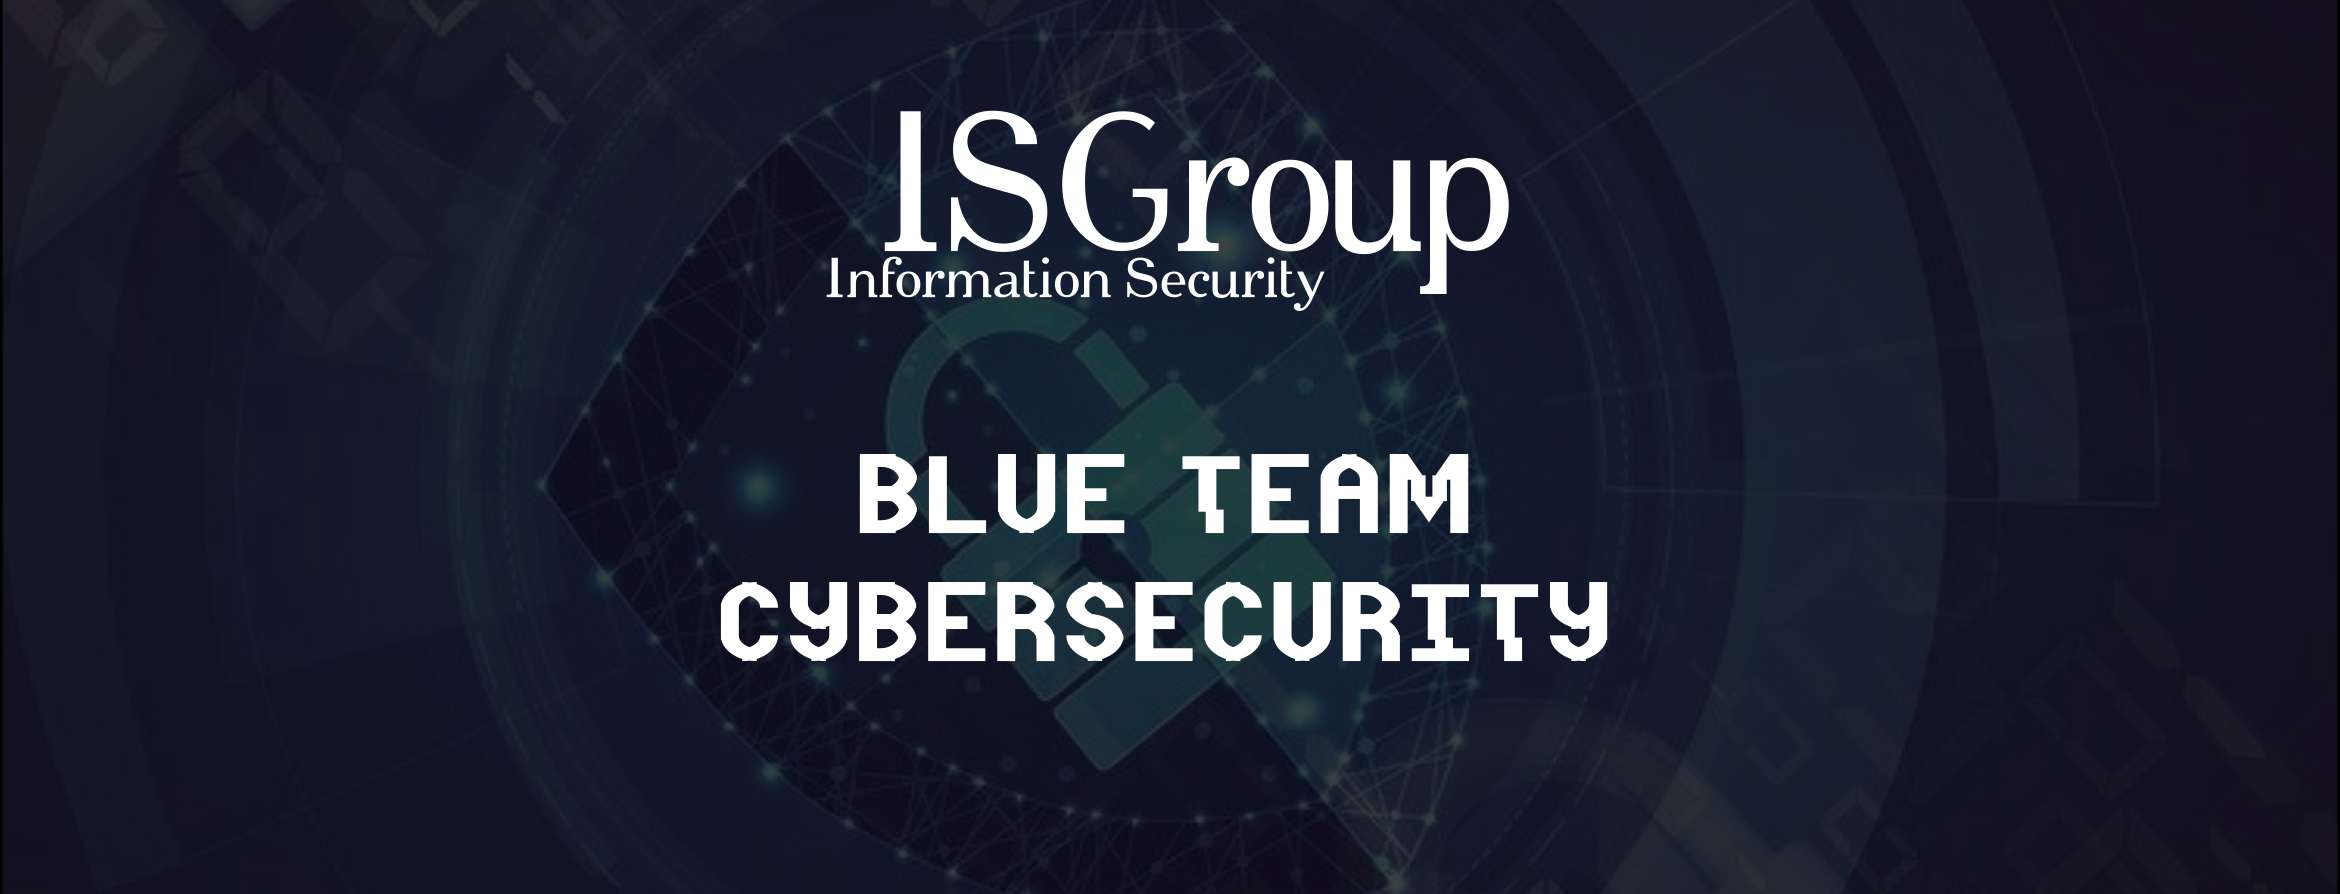 Blue Team Cybersecurity